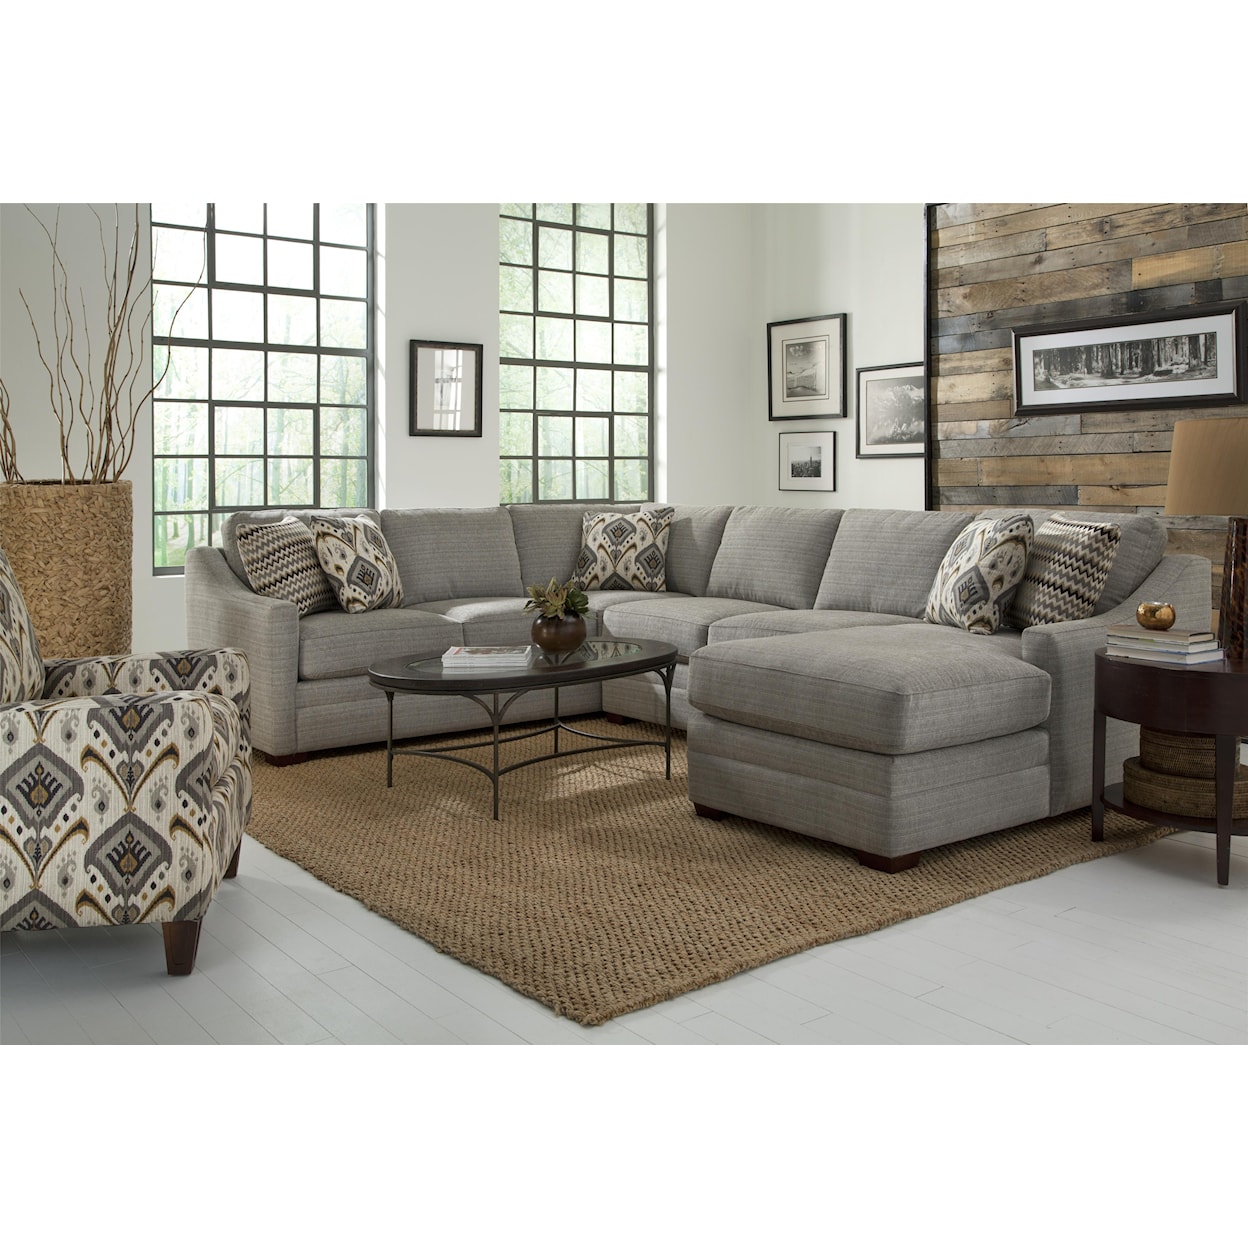 Craftmaster F9 Design Options Customizable 4 Pc Sectional Sofa